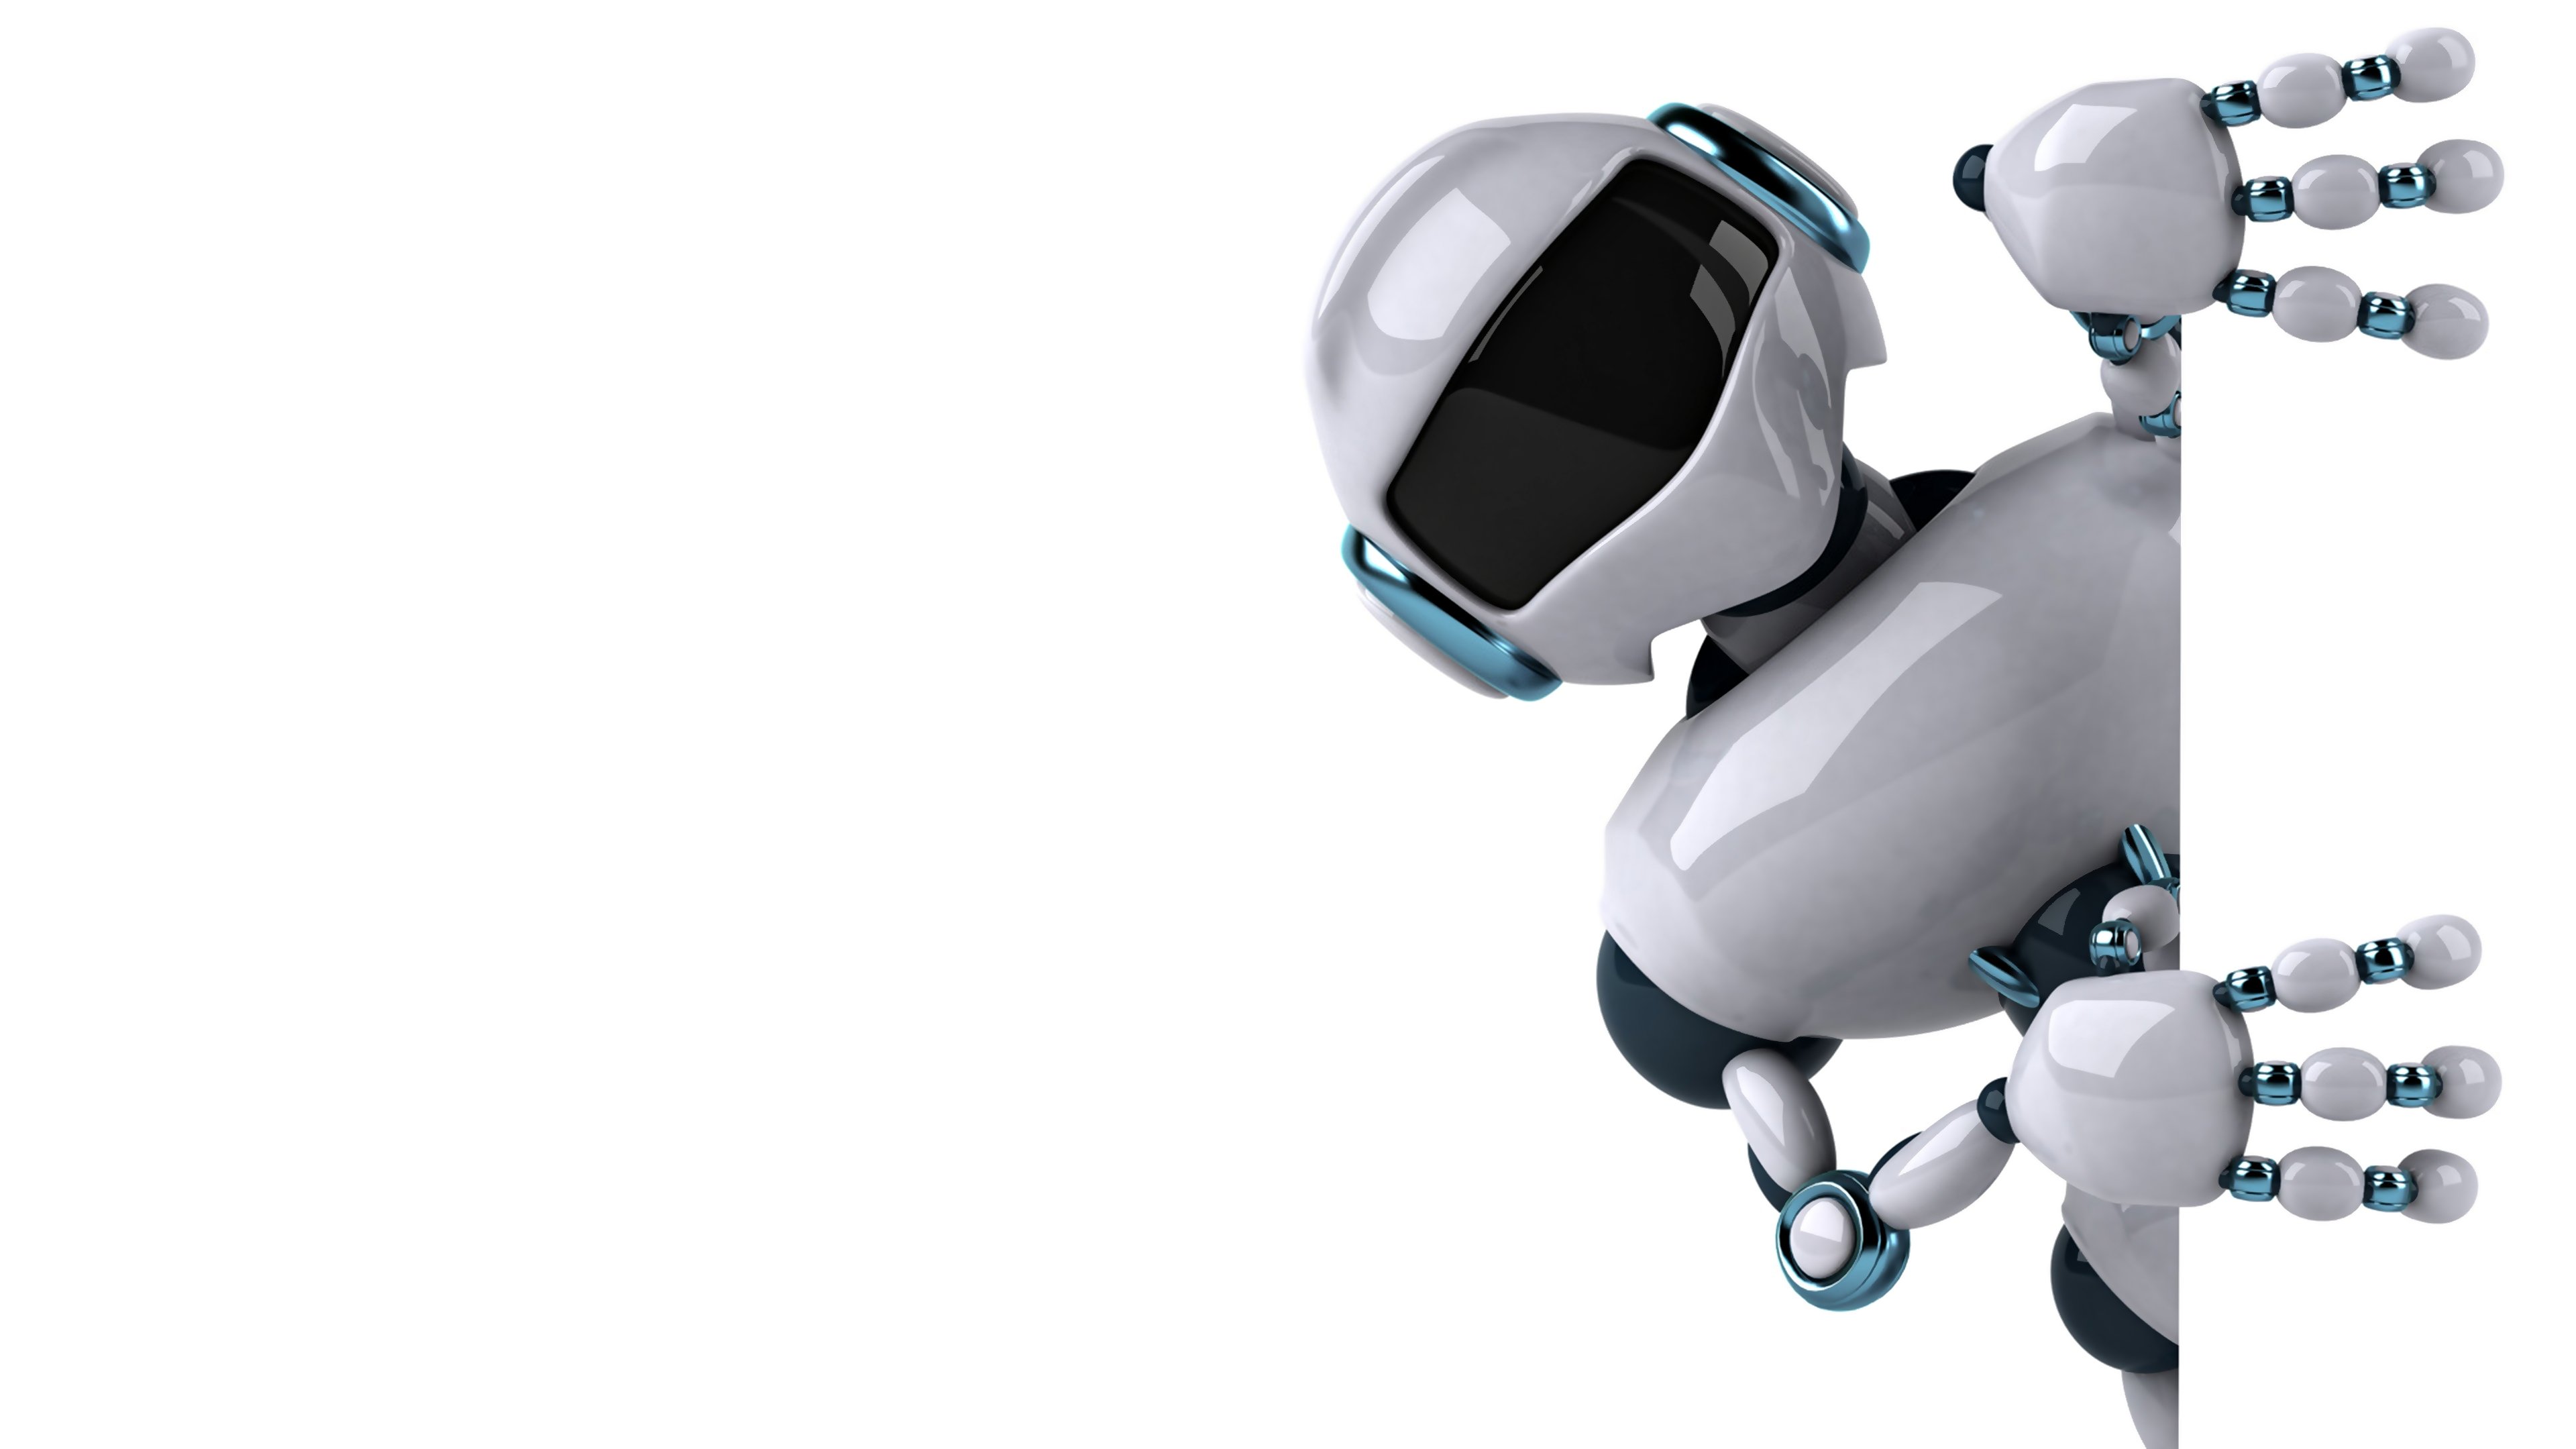 Futuristic Robot Images - Free Download on Freepik